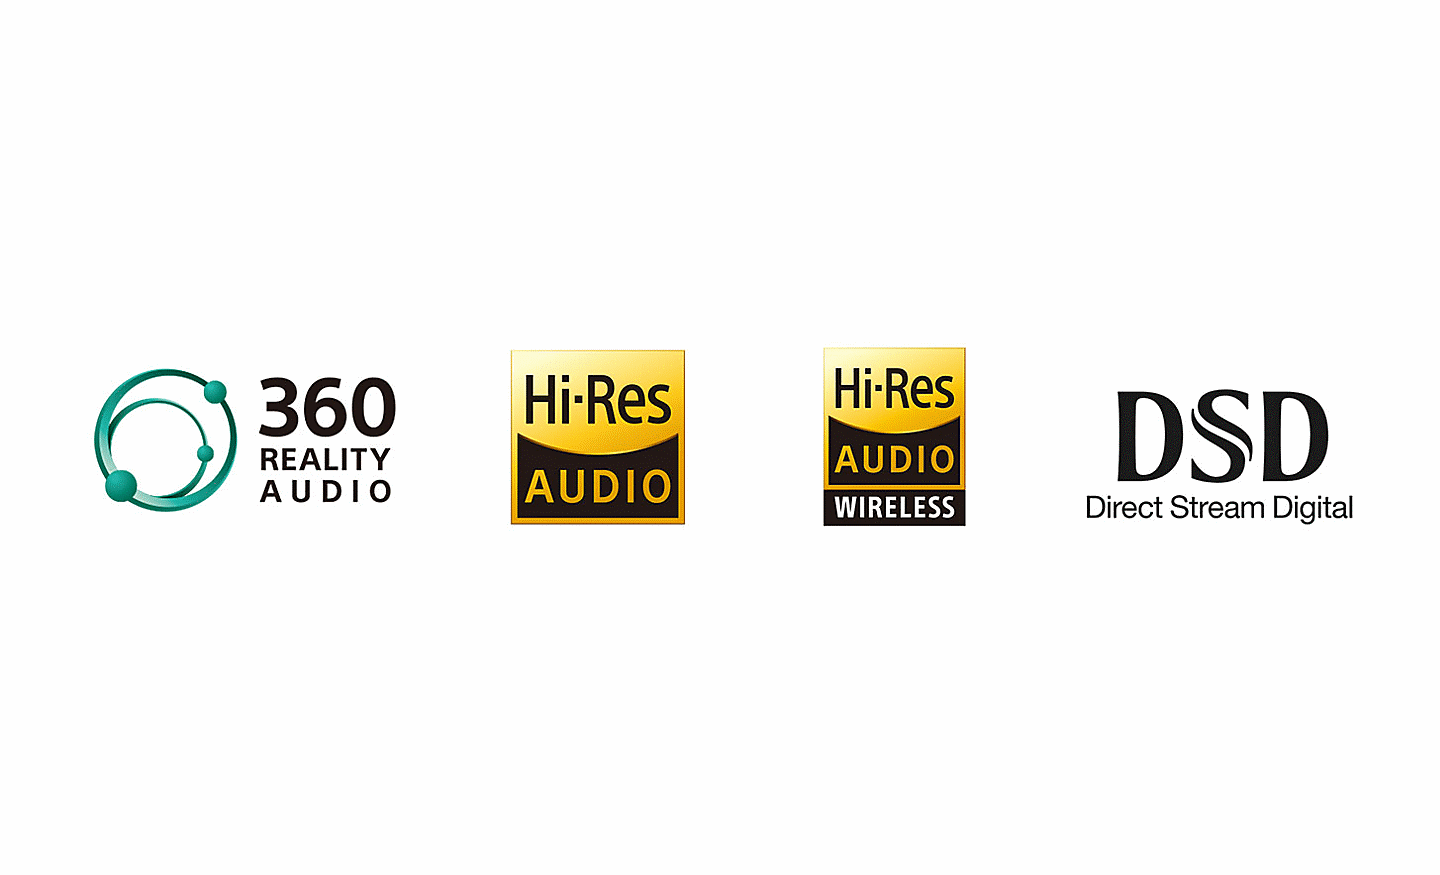 360 Reality Audio logotip, Hi-Res Audio logotip, Hi-Res Audio Wireless logotip, DSD Direct Stream Digital logotip